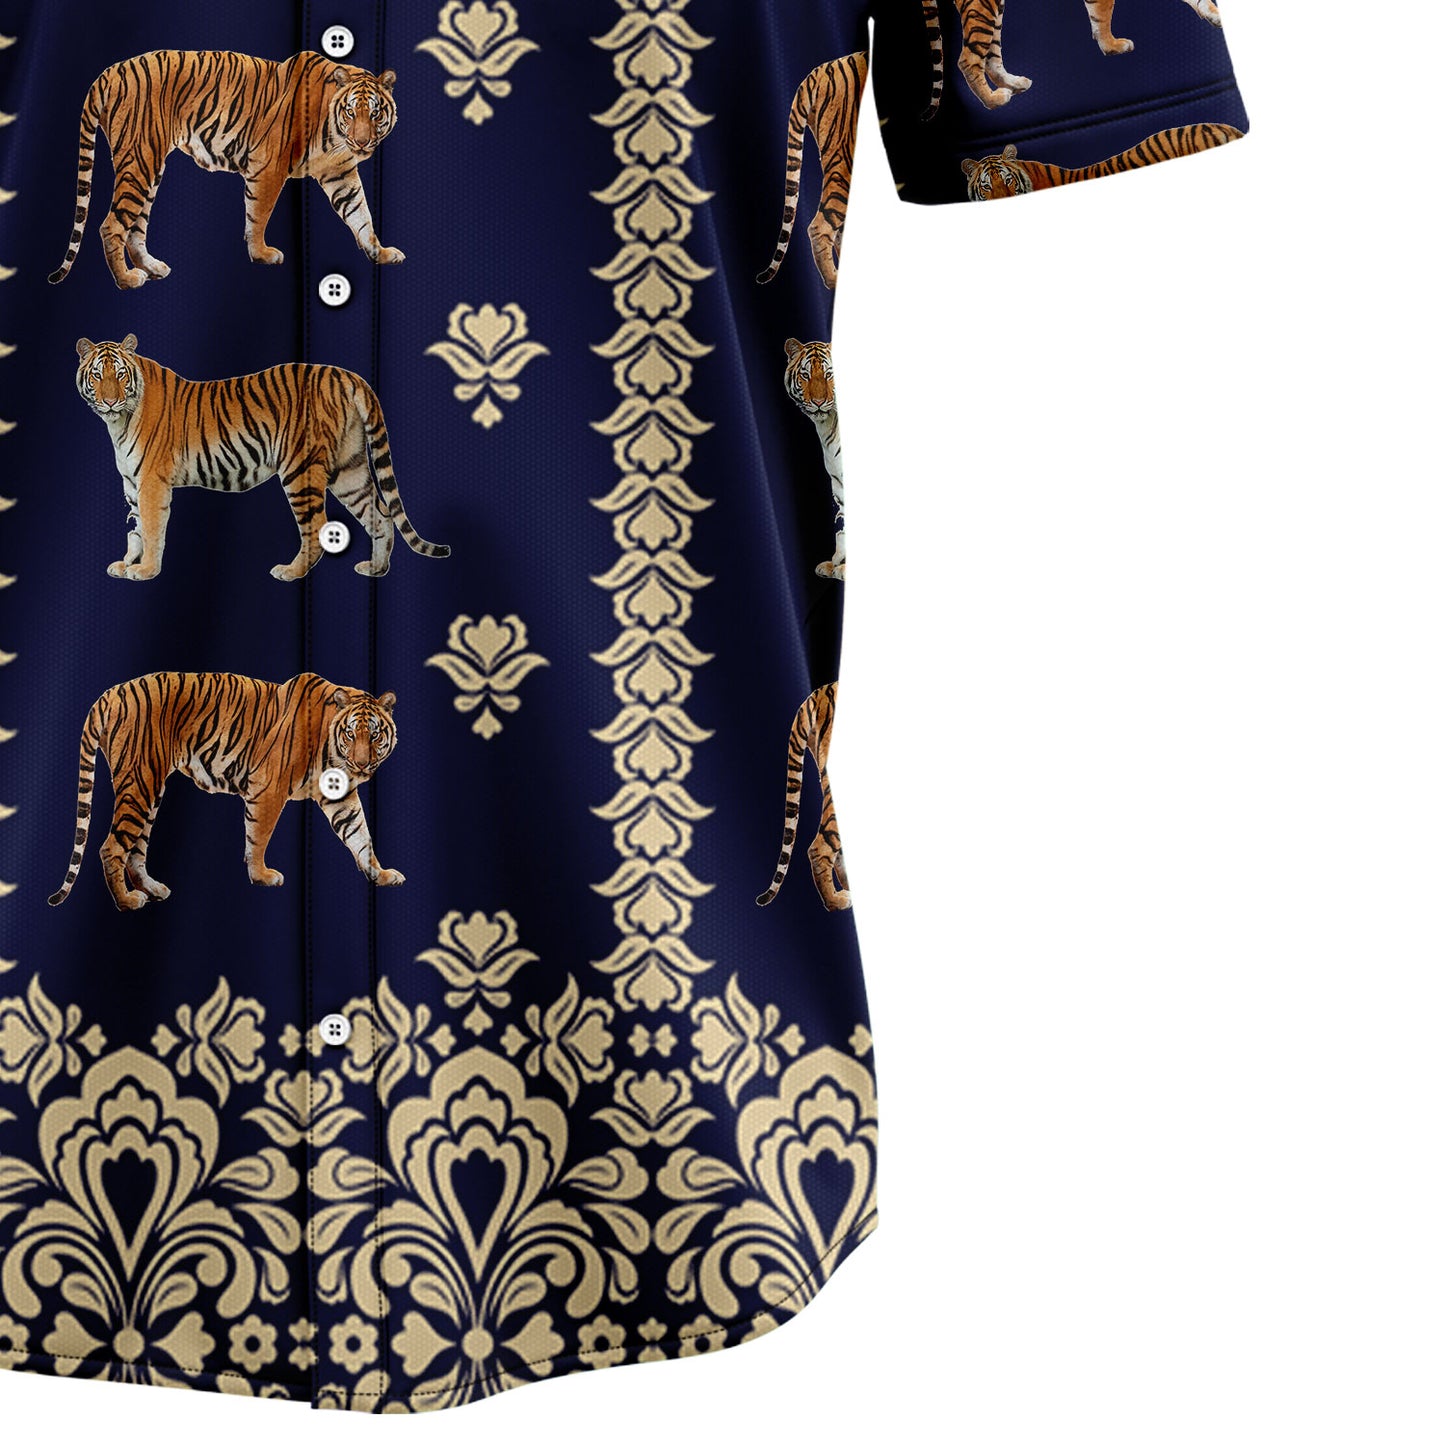 Tiger Lover TG5805 Hawaiian Shirt